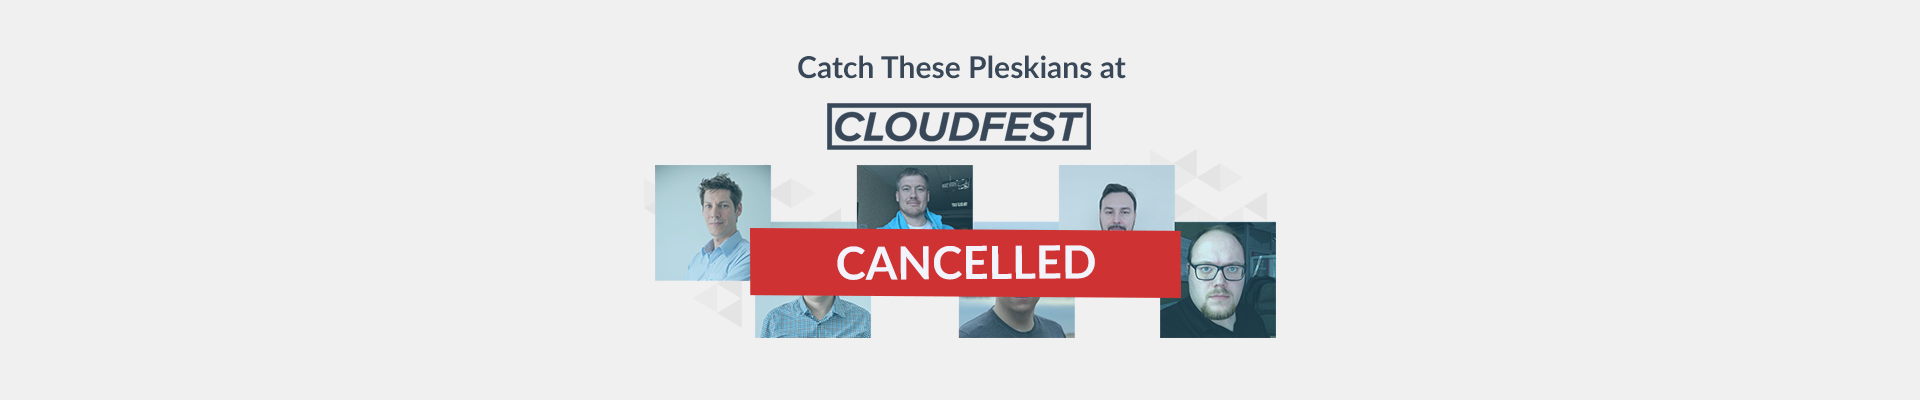 Cloudfest 2020 - Cancelled - Plesk Sponsor